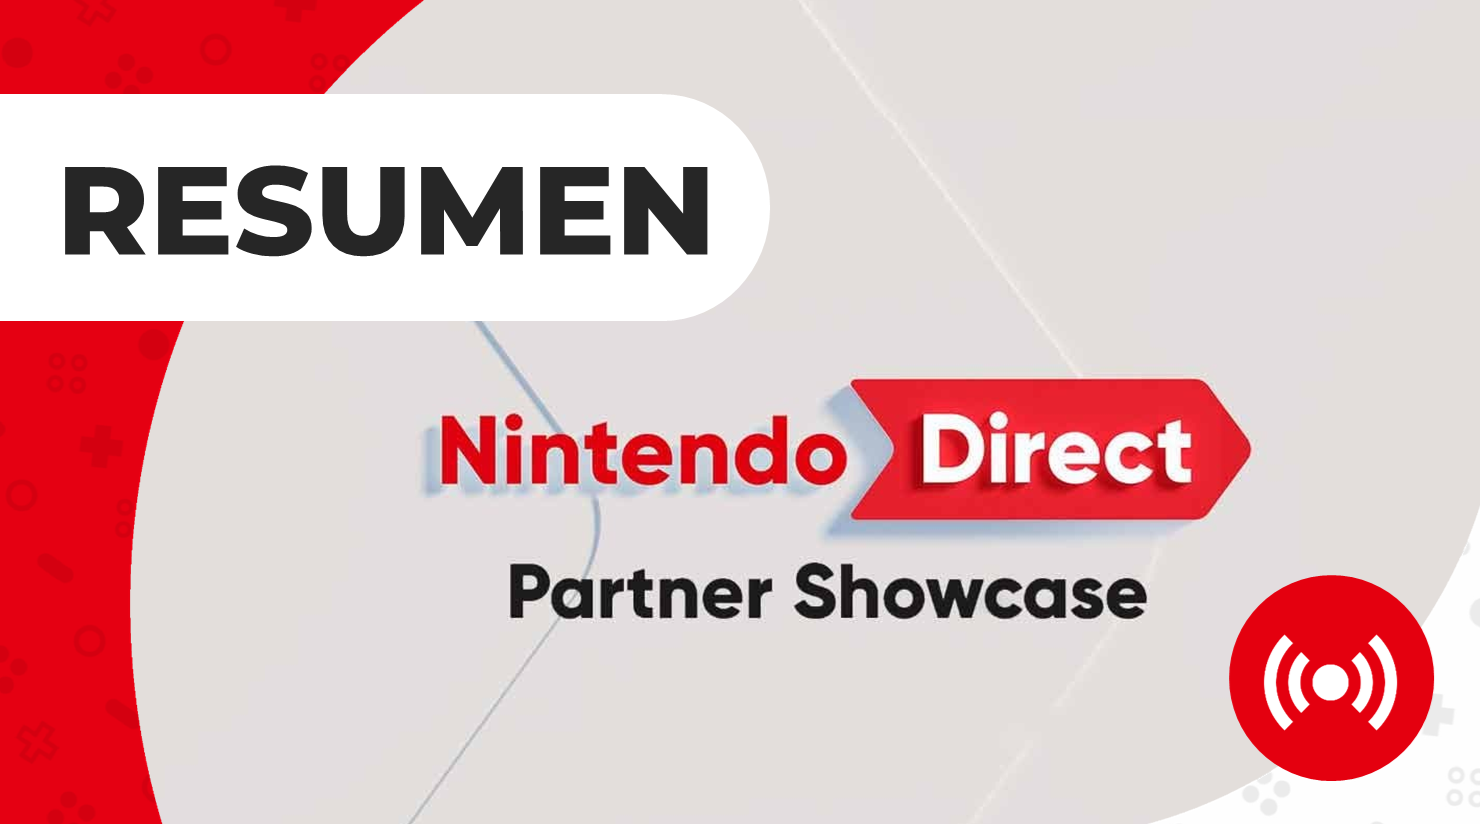 Resumen completo del Nintendo Direct Partner Showcase (21/2/24)